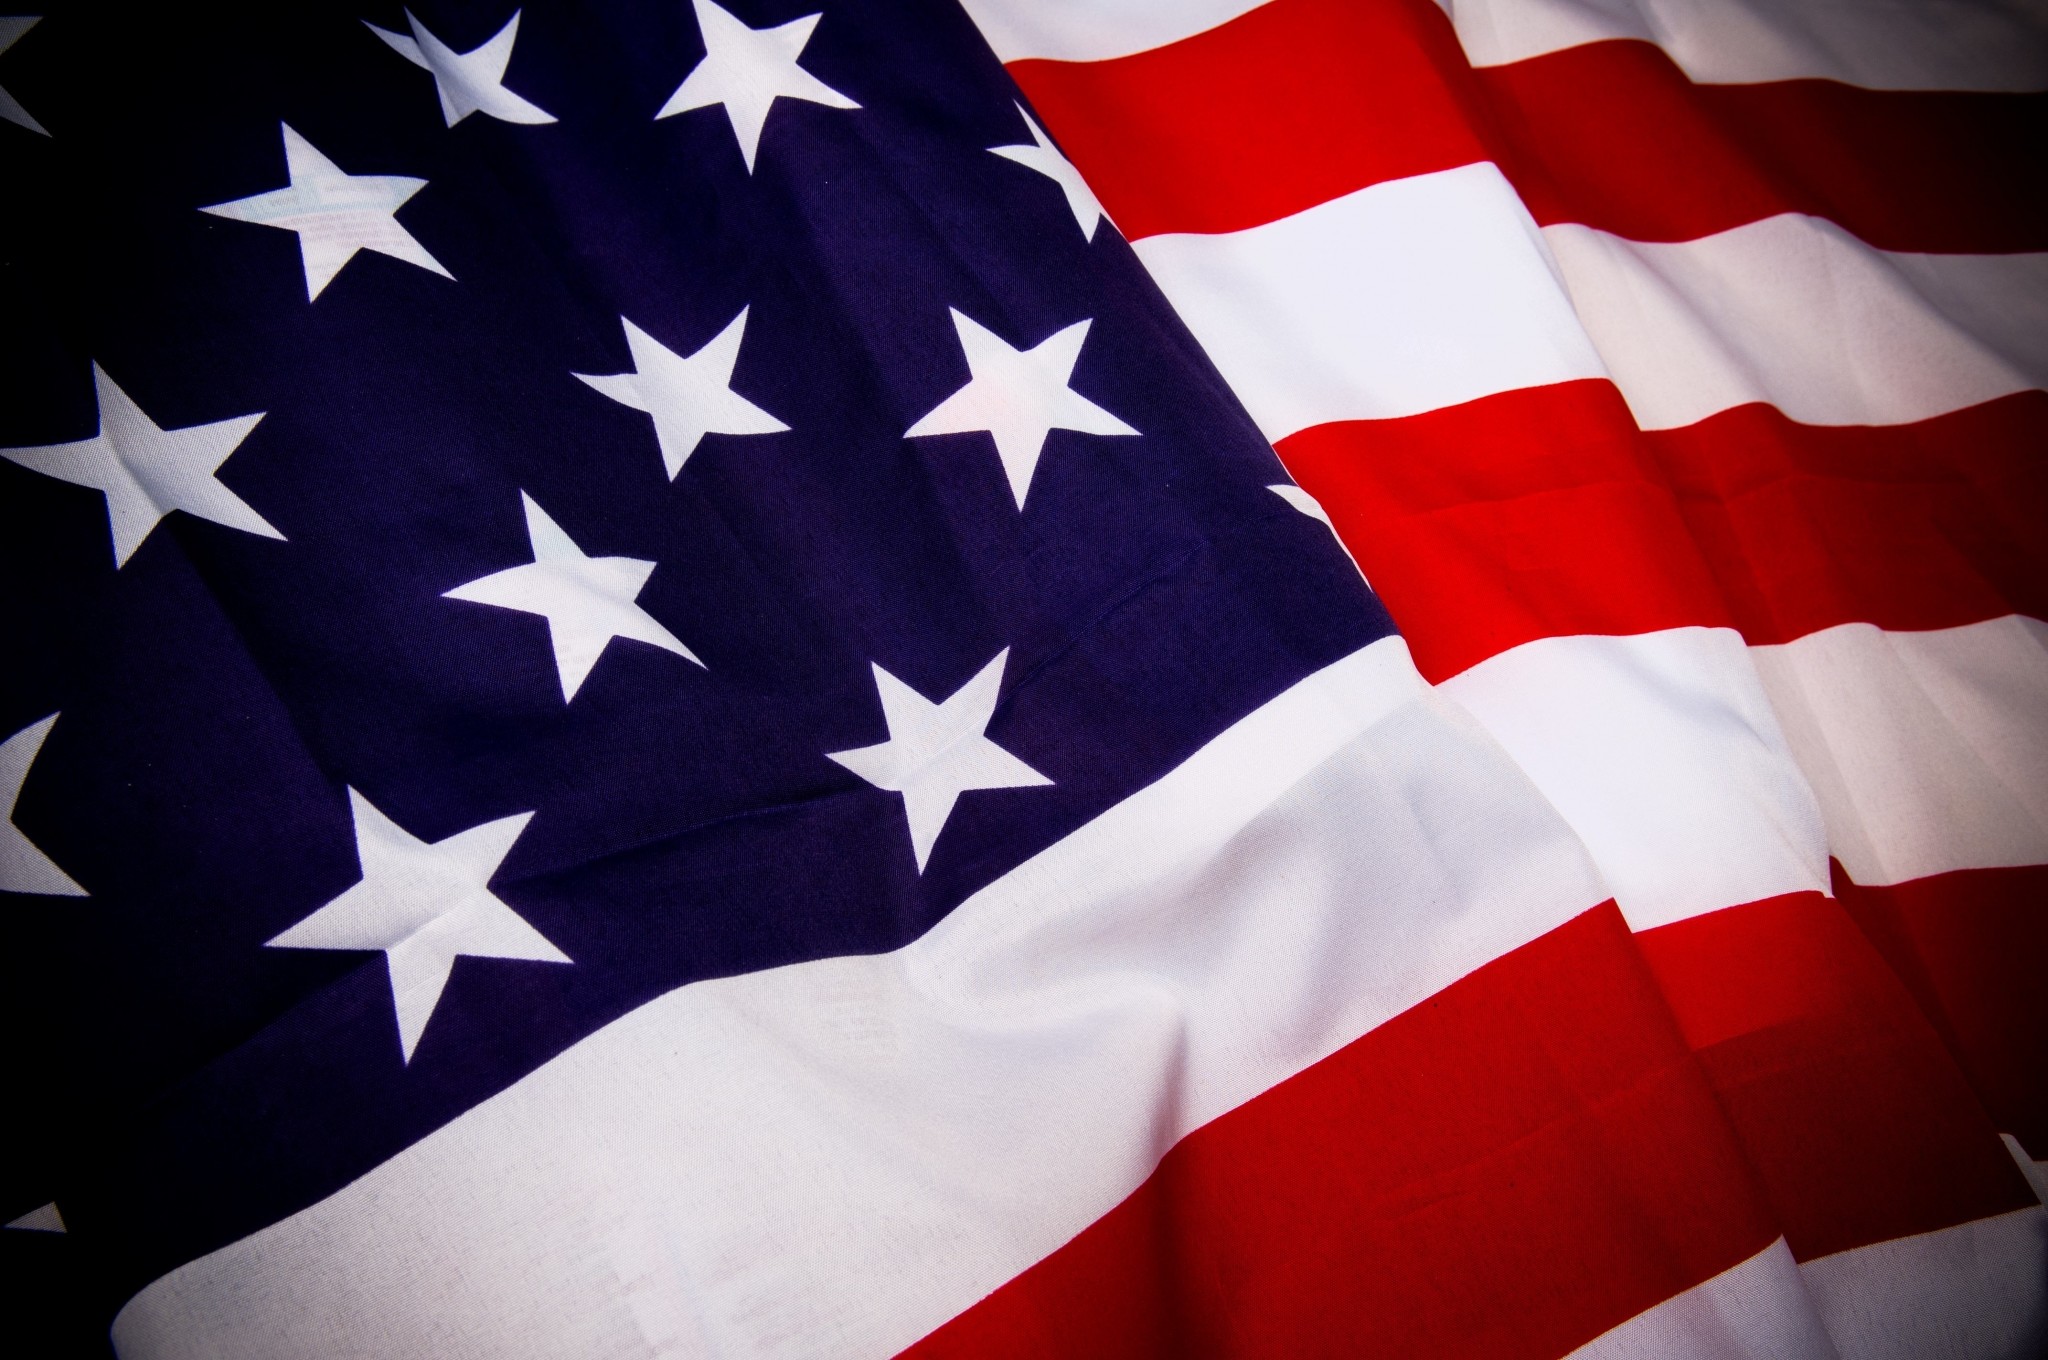 2048x1360 best ideas about American flag wallpaper on Pinterest